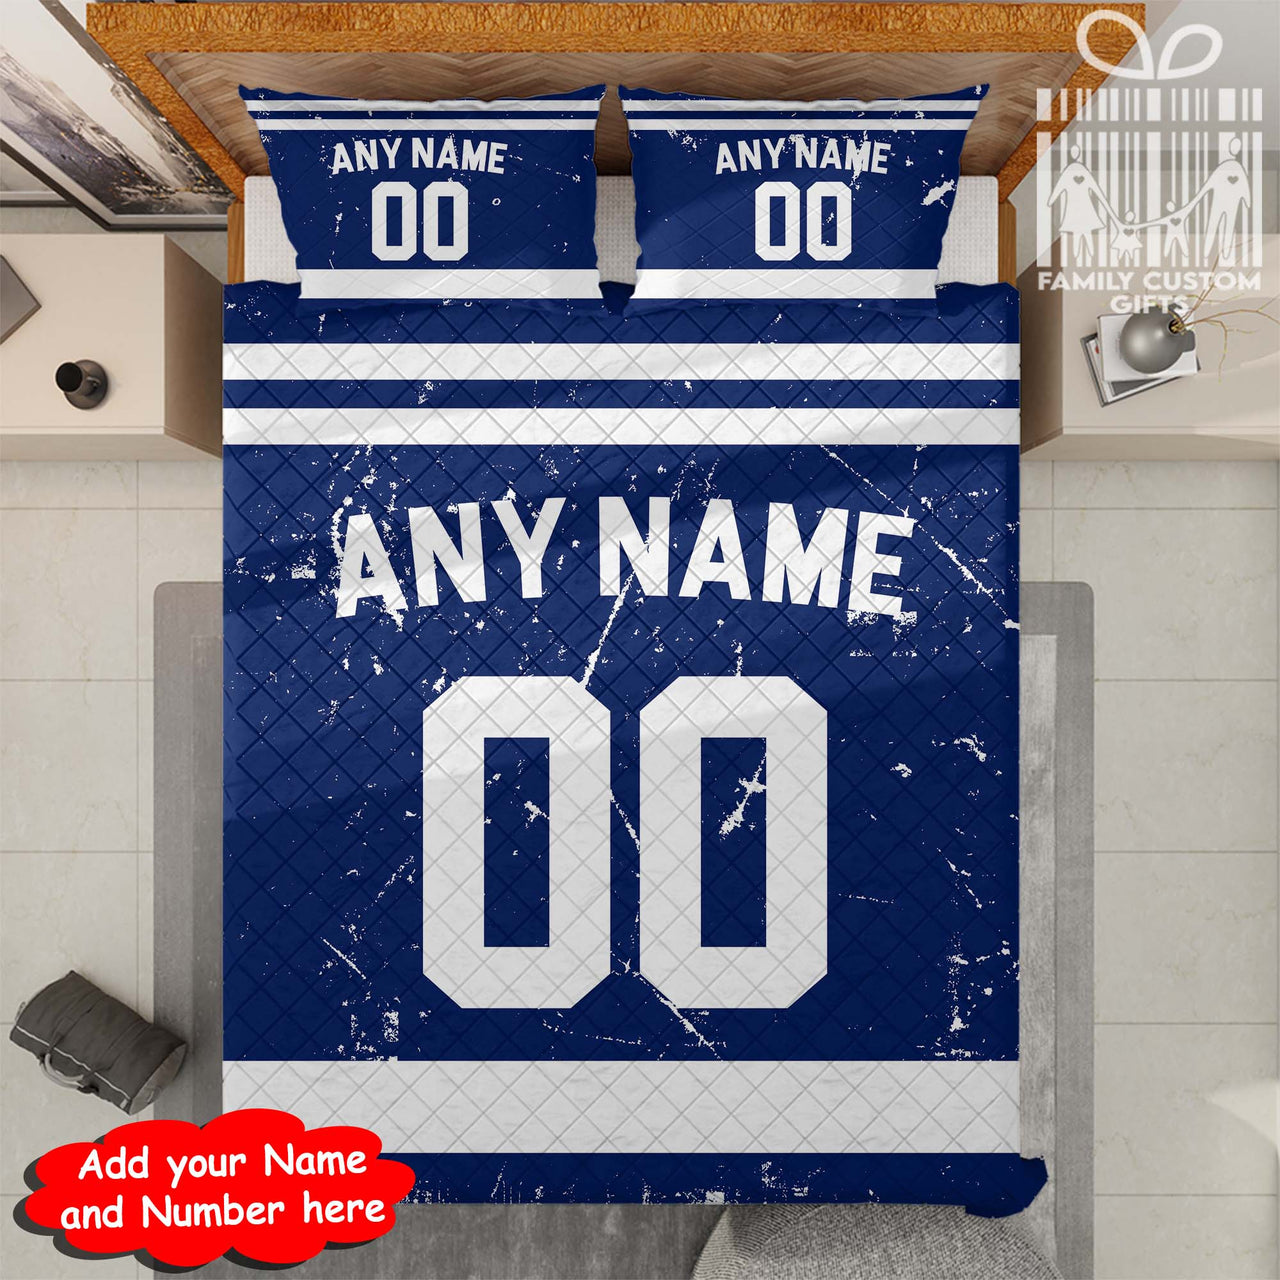 Custom Quilt Sets Toronto Jersey Personalized Ice hockey Premium Quilt Bedding for Men Women